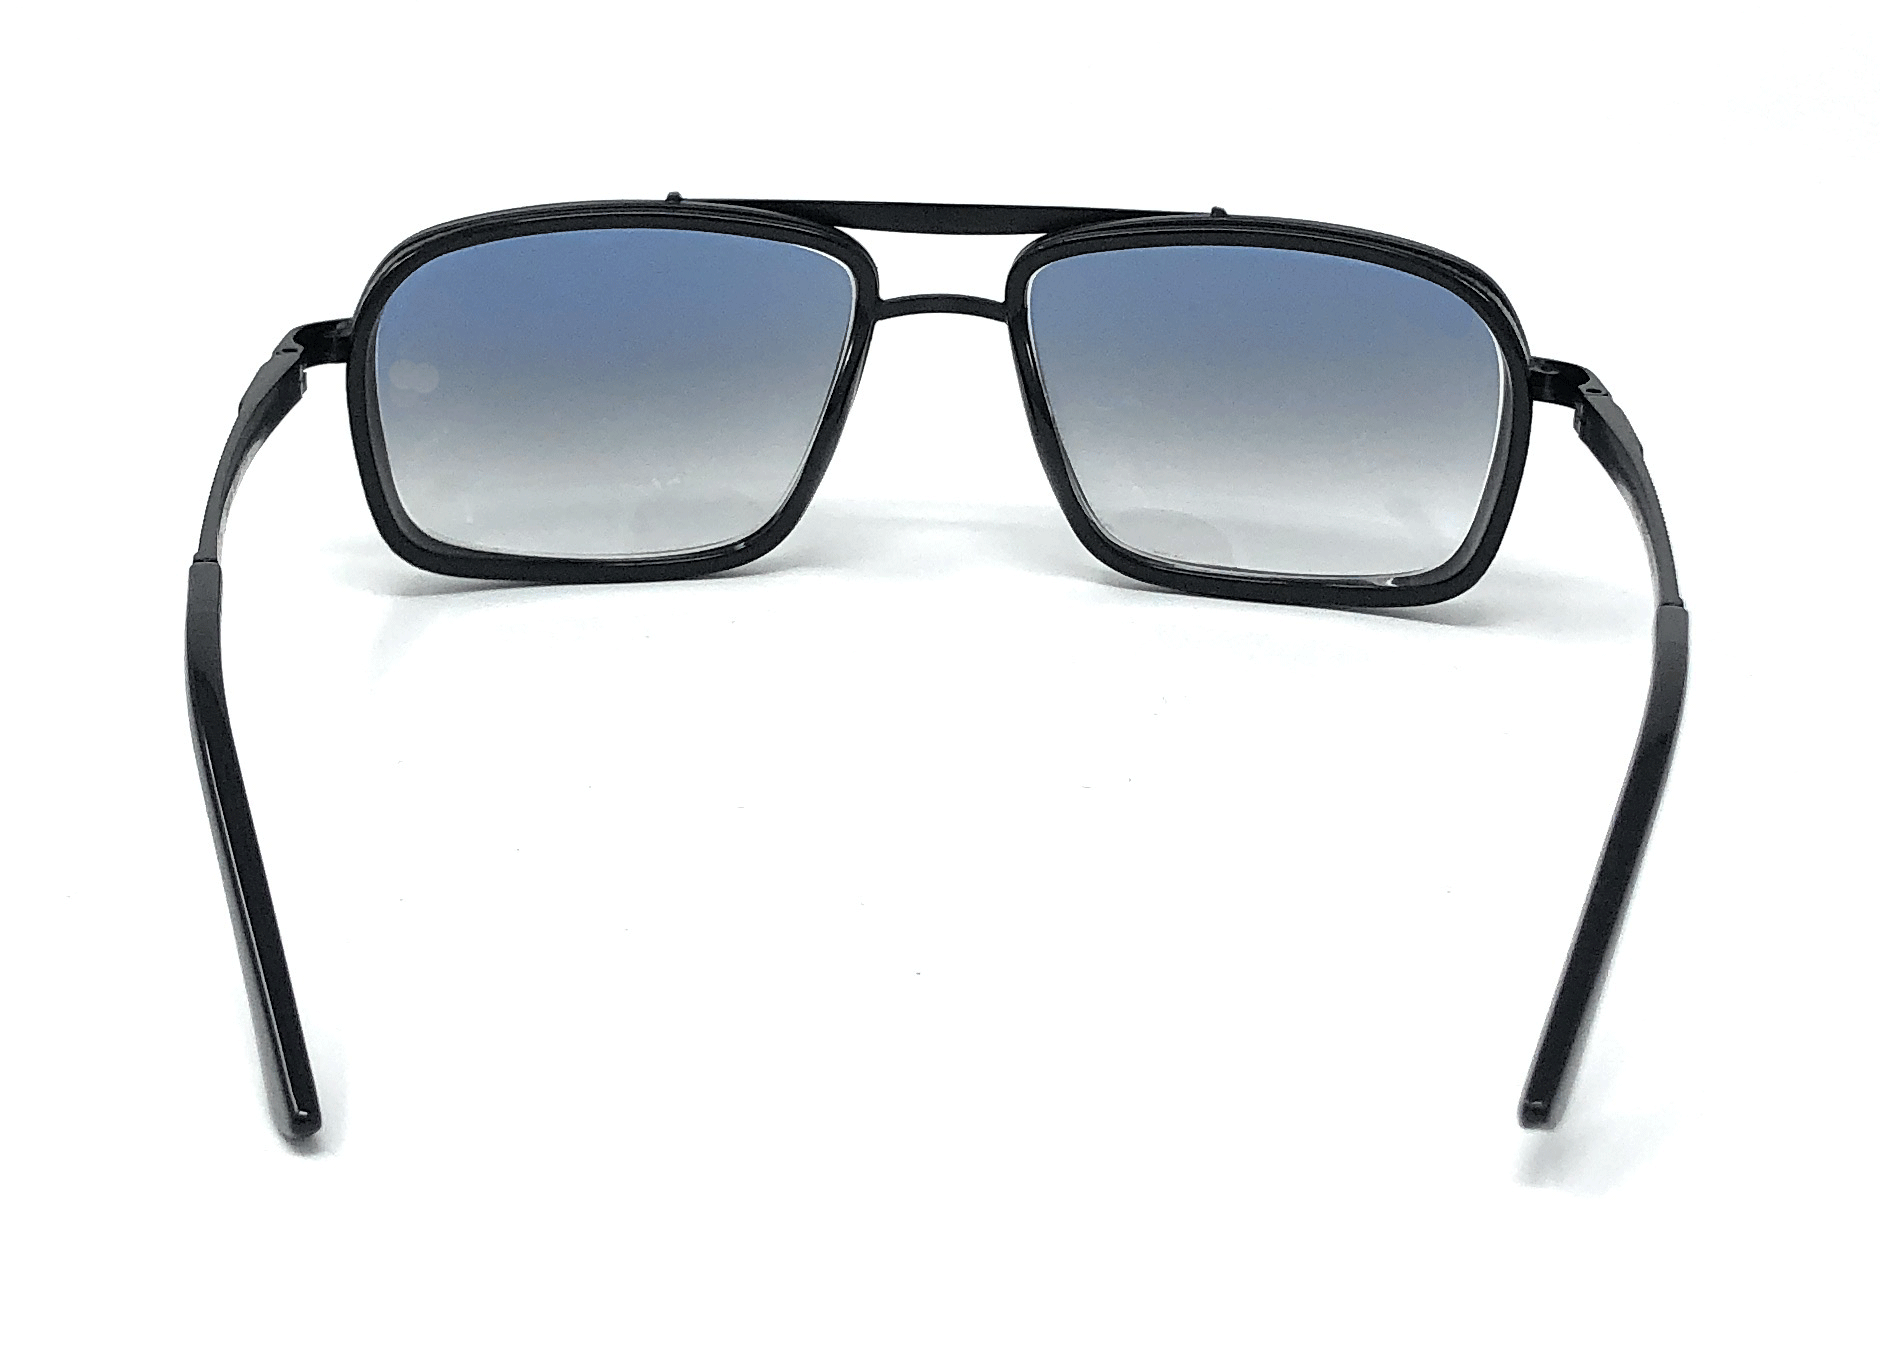 Buy Black Sunglasses for Men by Eyewearlabs Online | Ajio.com